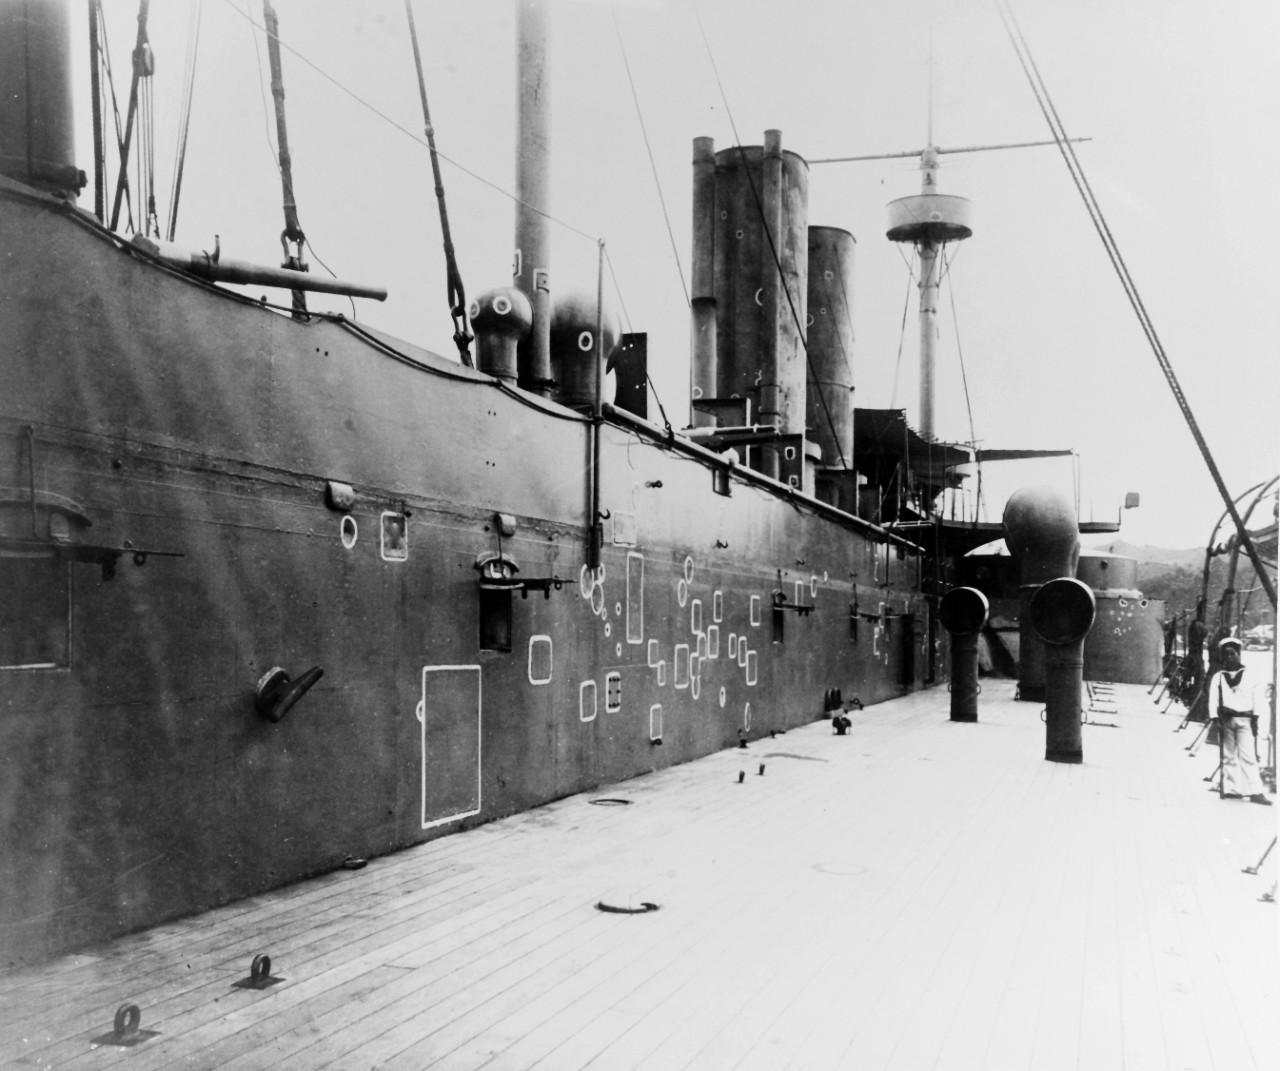 CHEN YUEN (Chinese Battleship, 1882-1914)